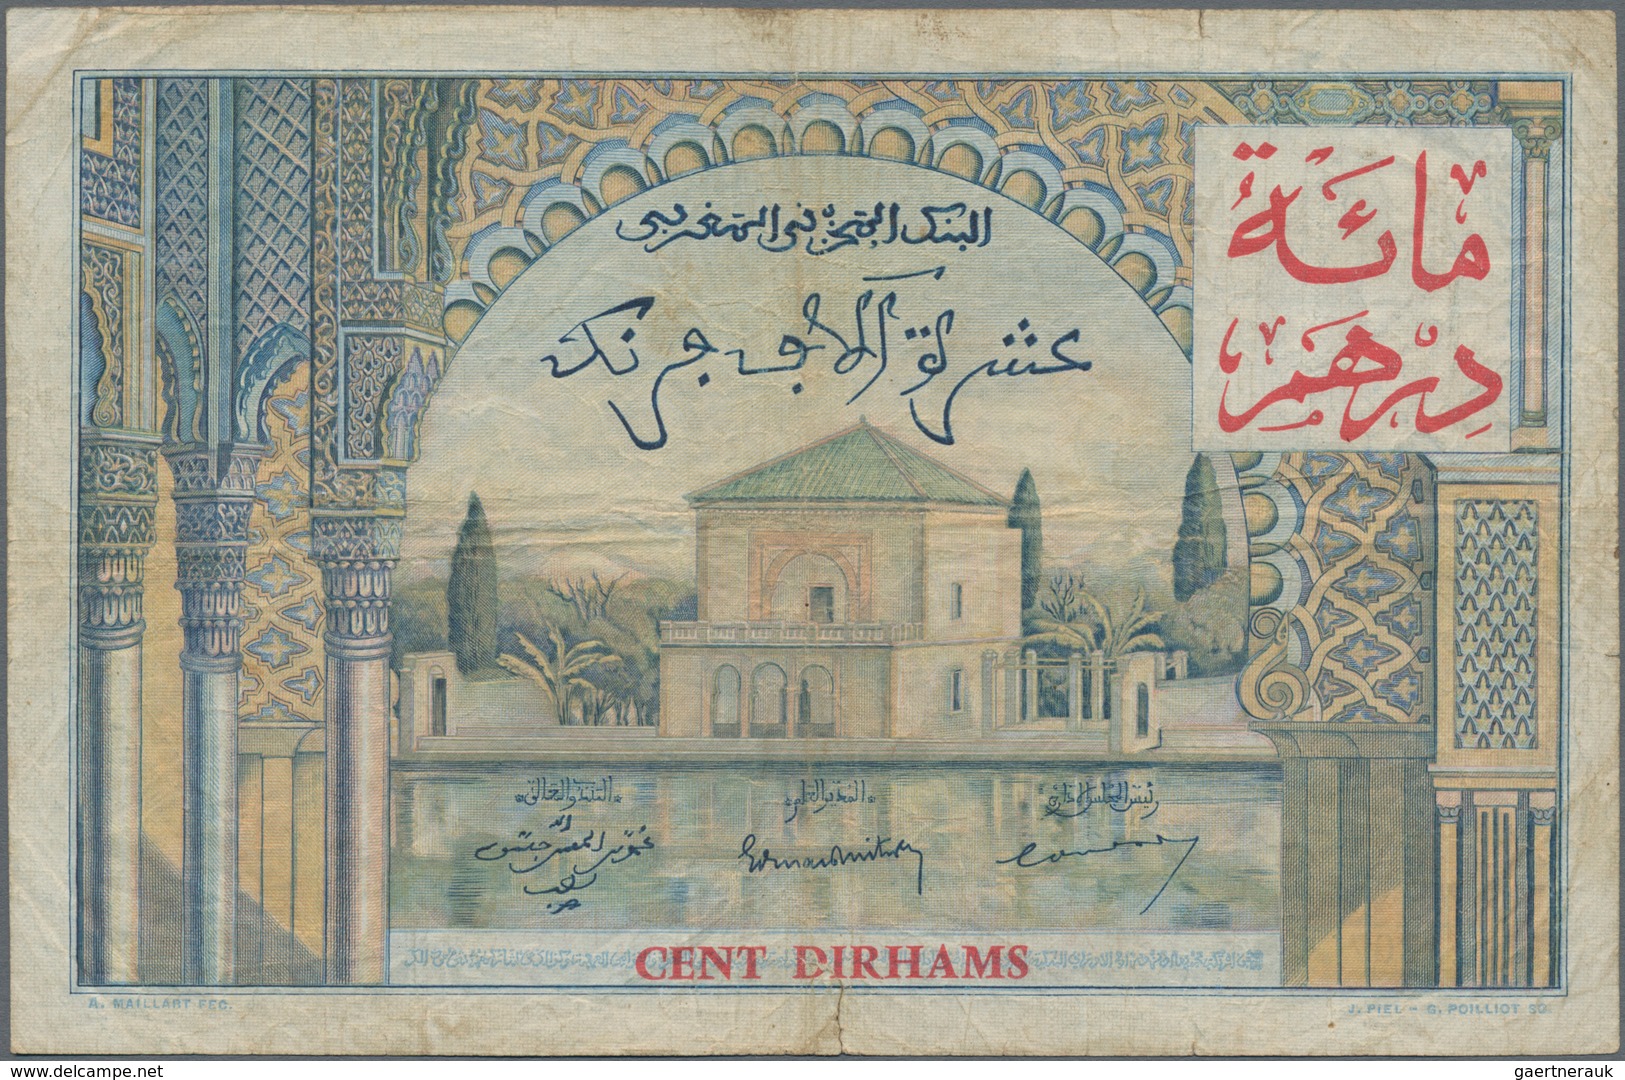 Morocco / Marokko: Banque D'État Du Maroc 100 Dirhams On 10.000 Francs 1955 (1959), P.52, Small Marg - Morocco